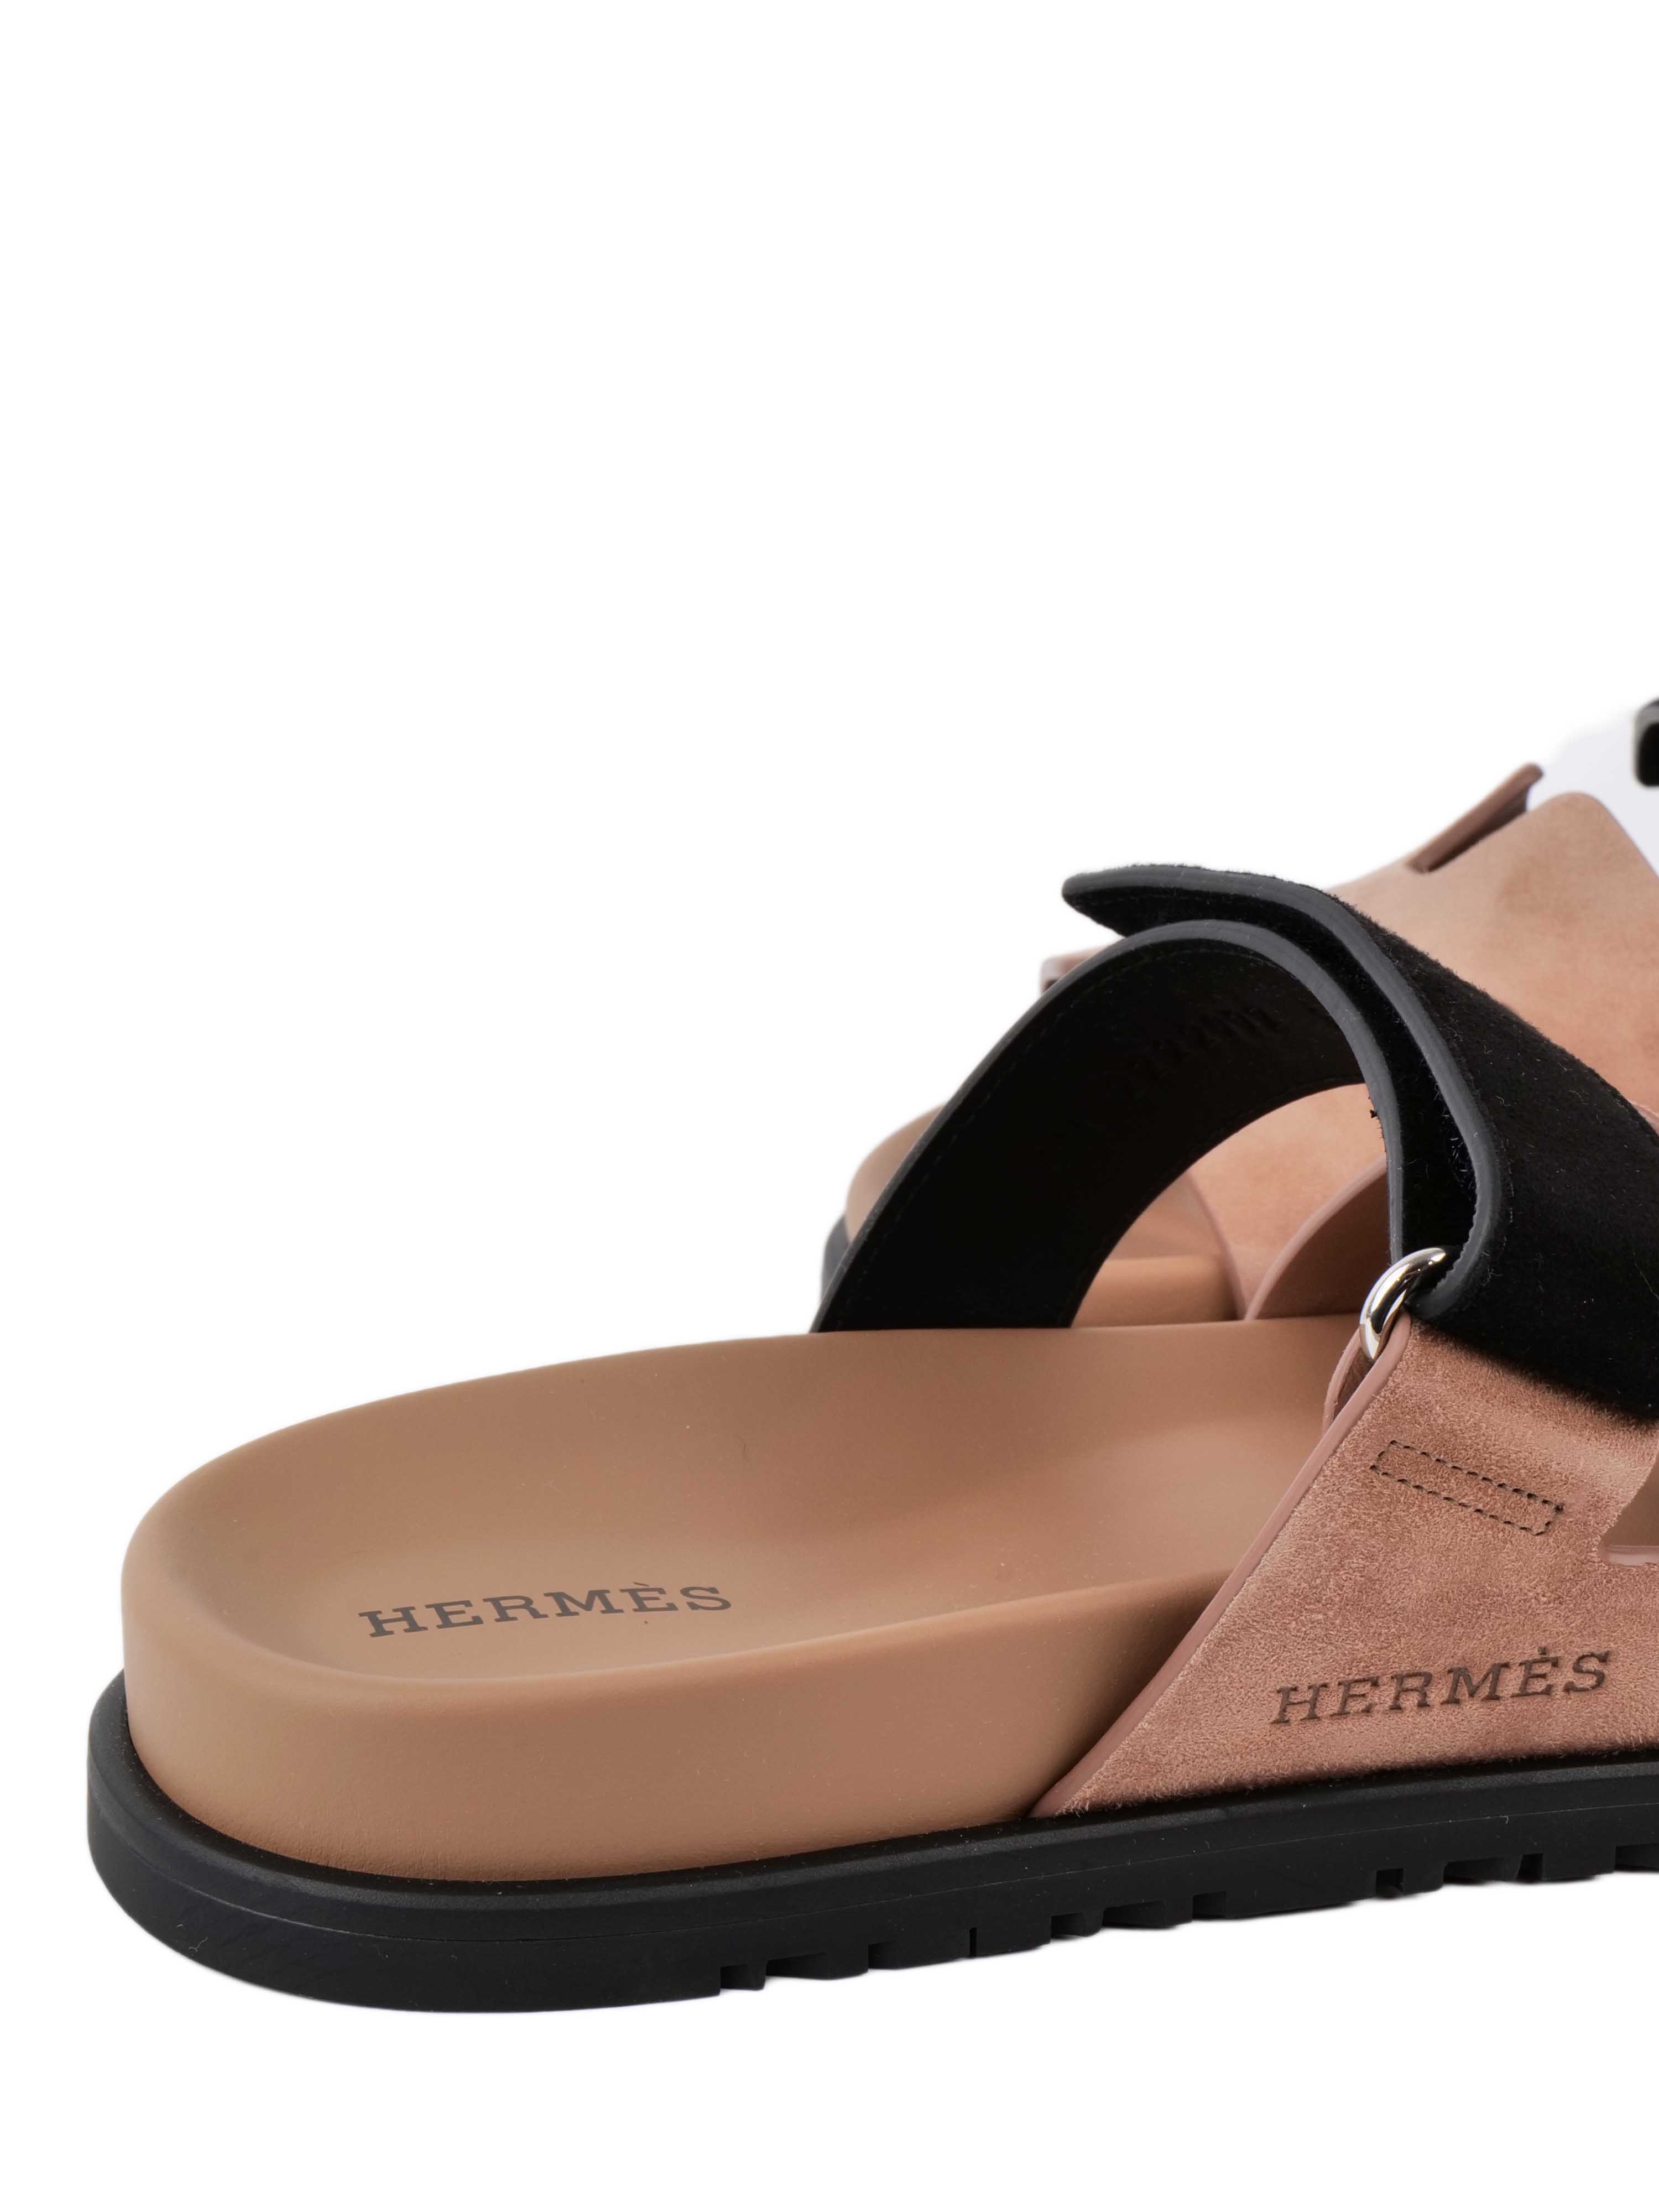 Hermes Chypre Sandals in Suede Rose Perle Noir 37.5.